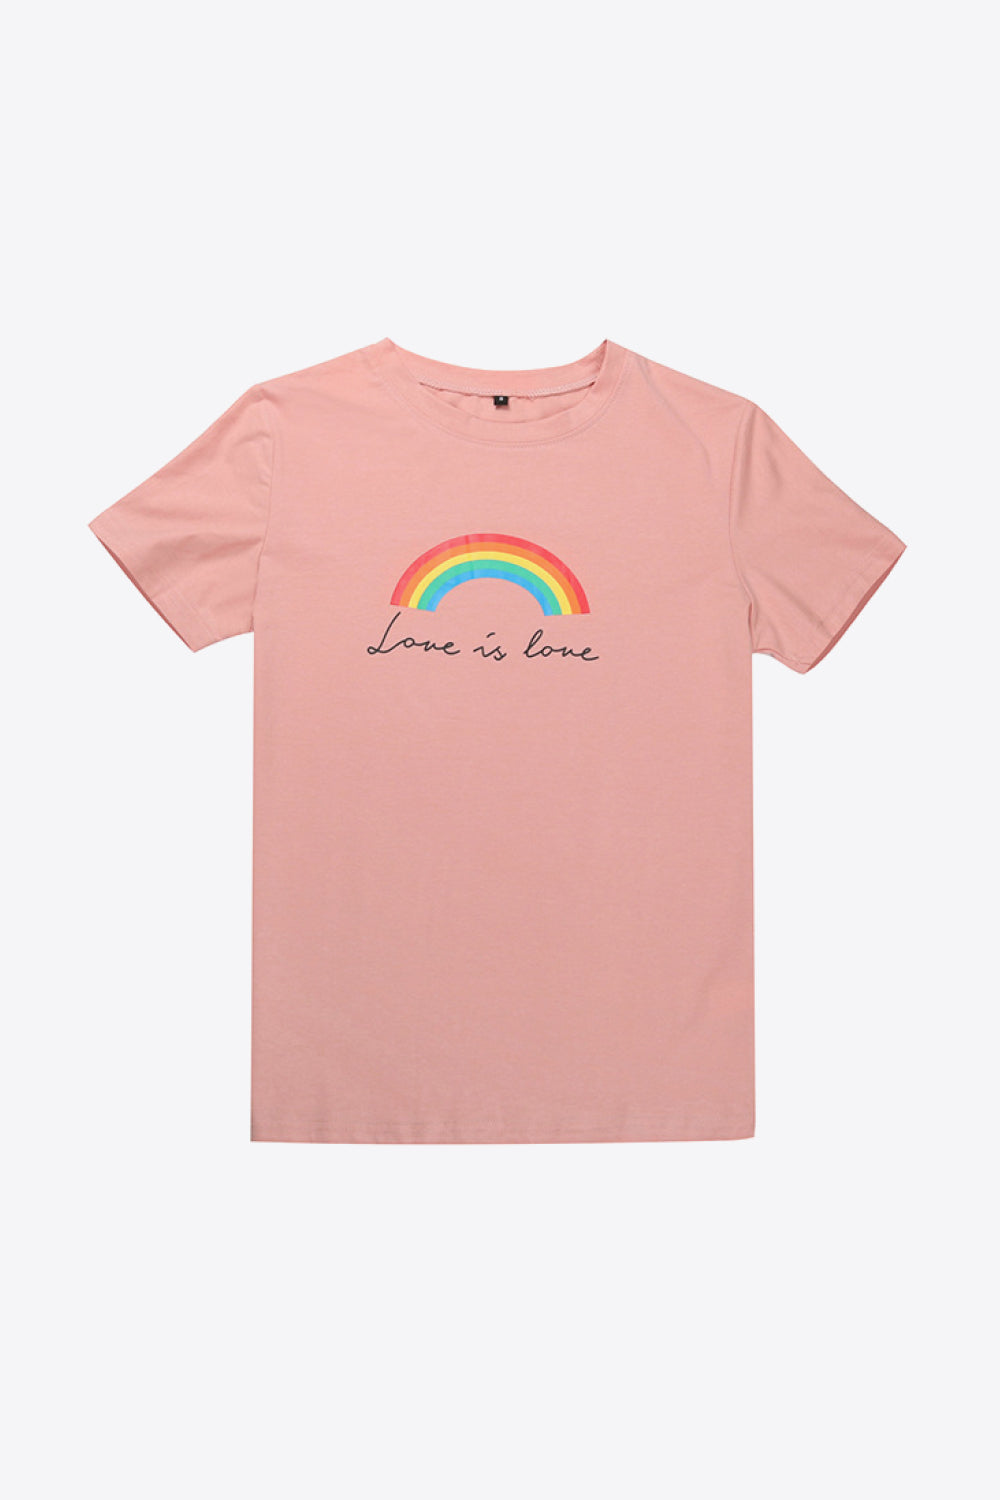 LOVE IS LOVE Rainbow Graphic Tee Shirt - Dash Trend